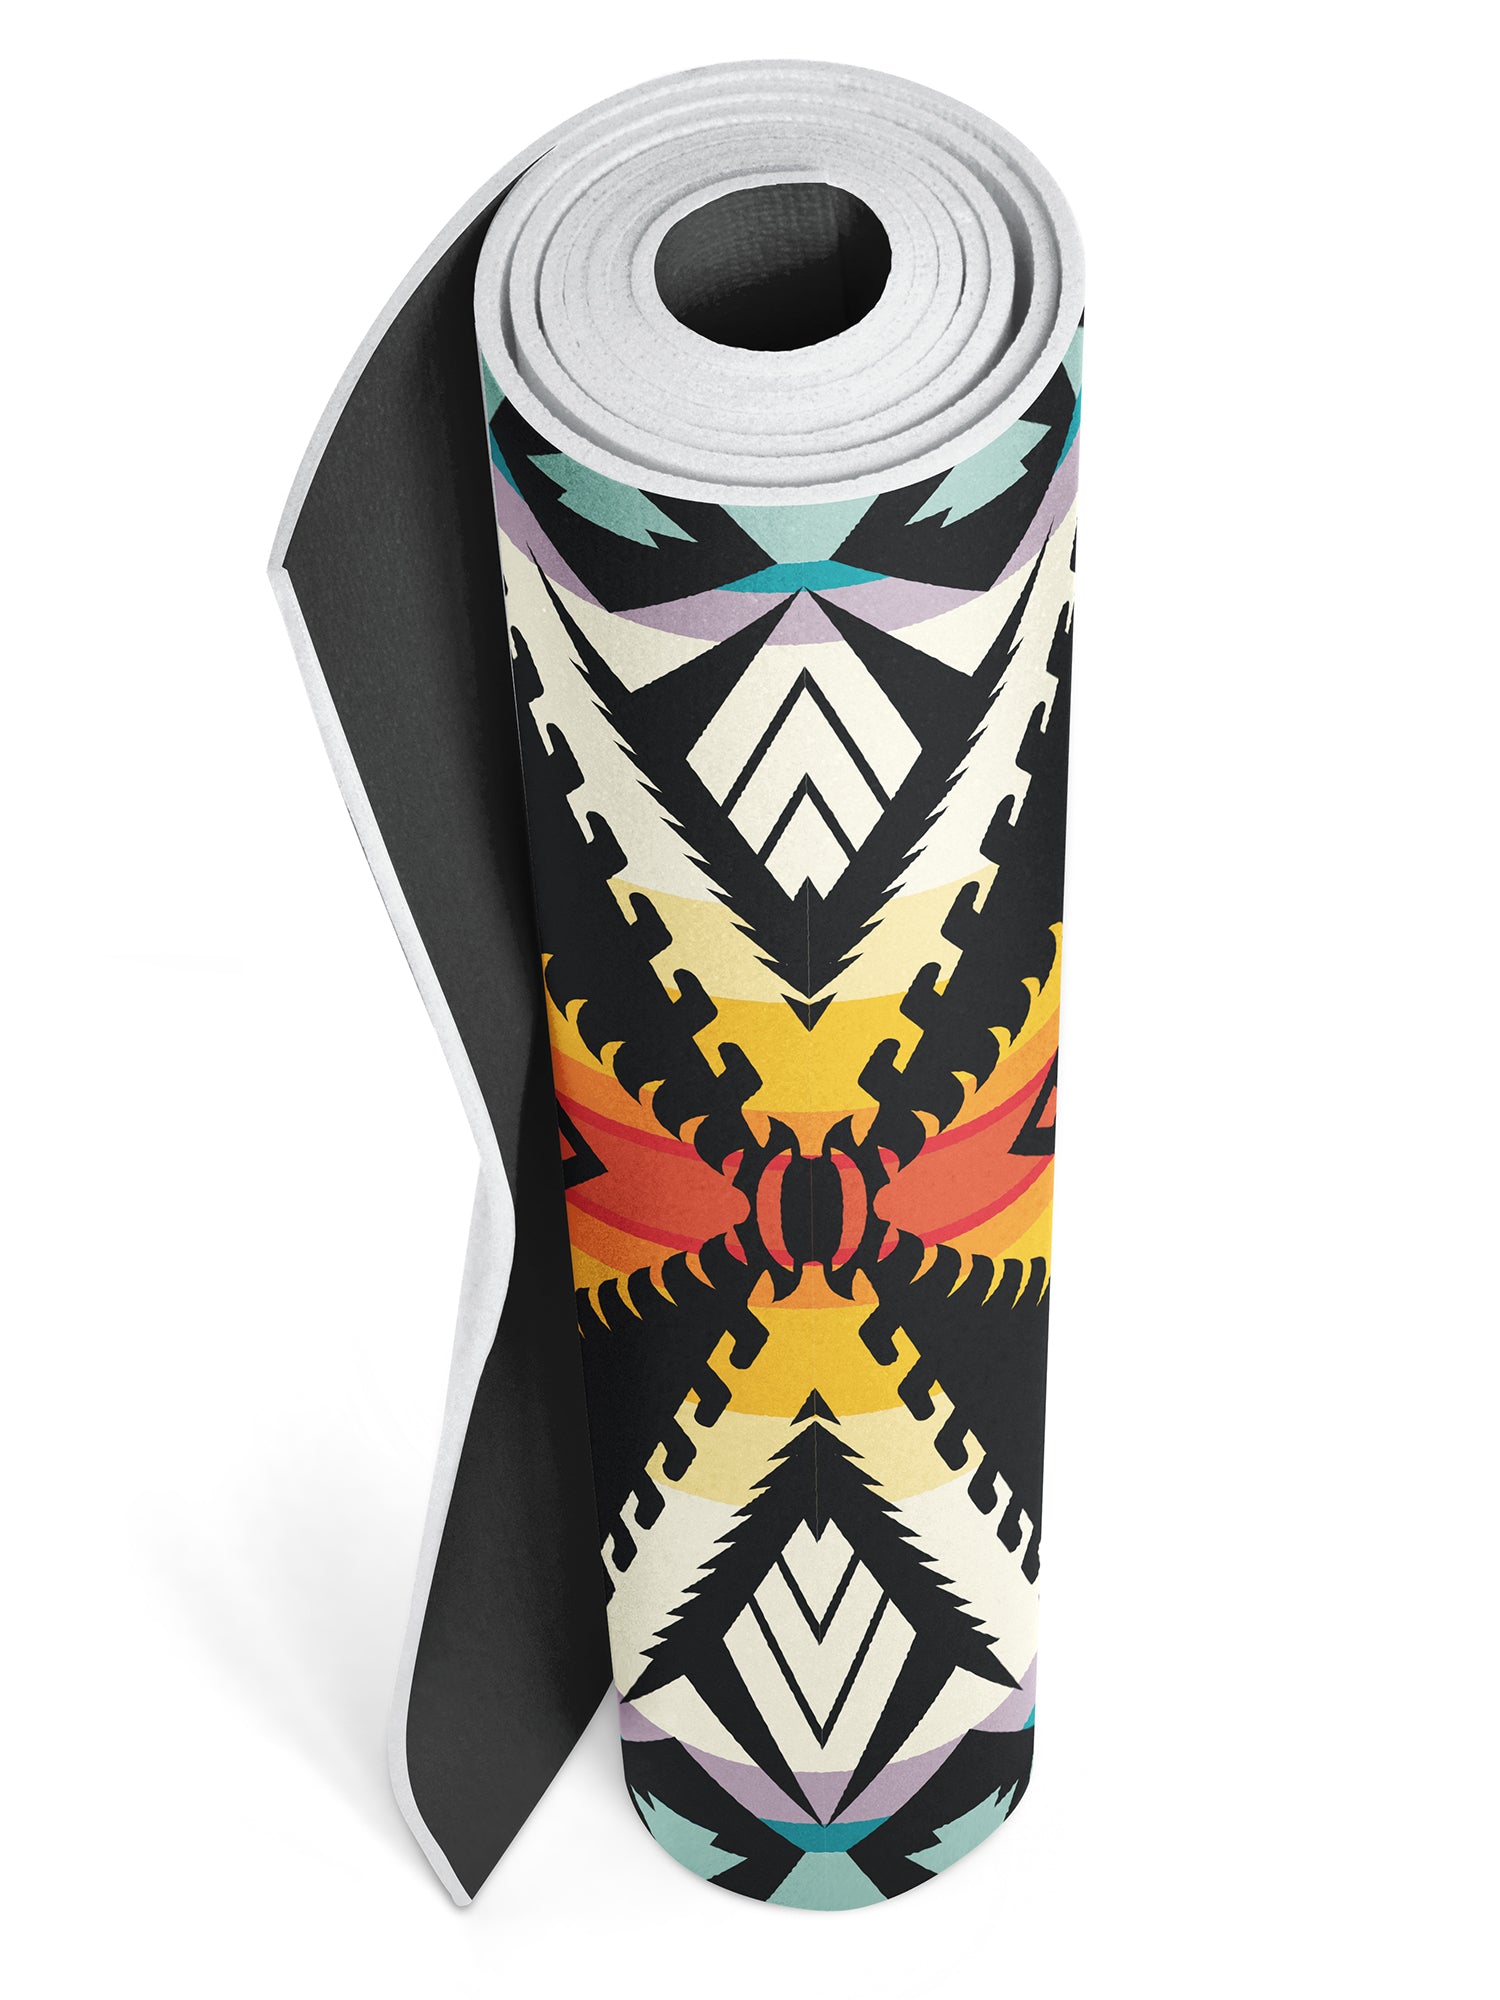 Pendleton Eagle Rock Yoga Mat by Yeti